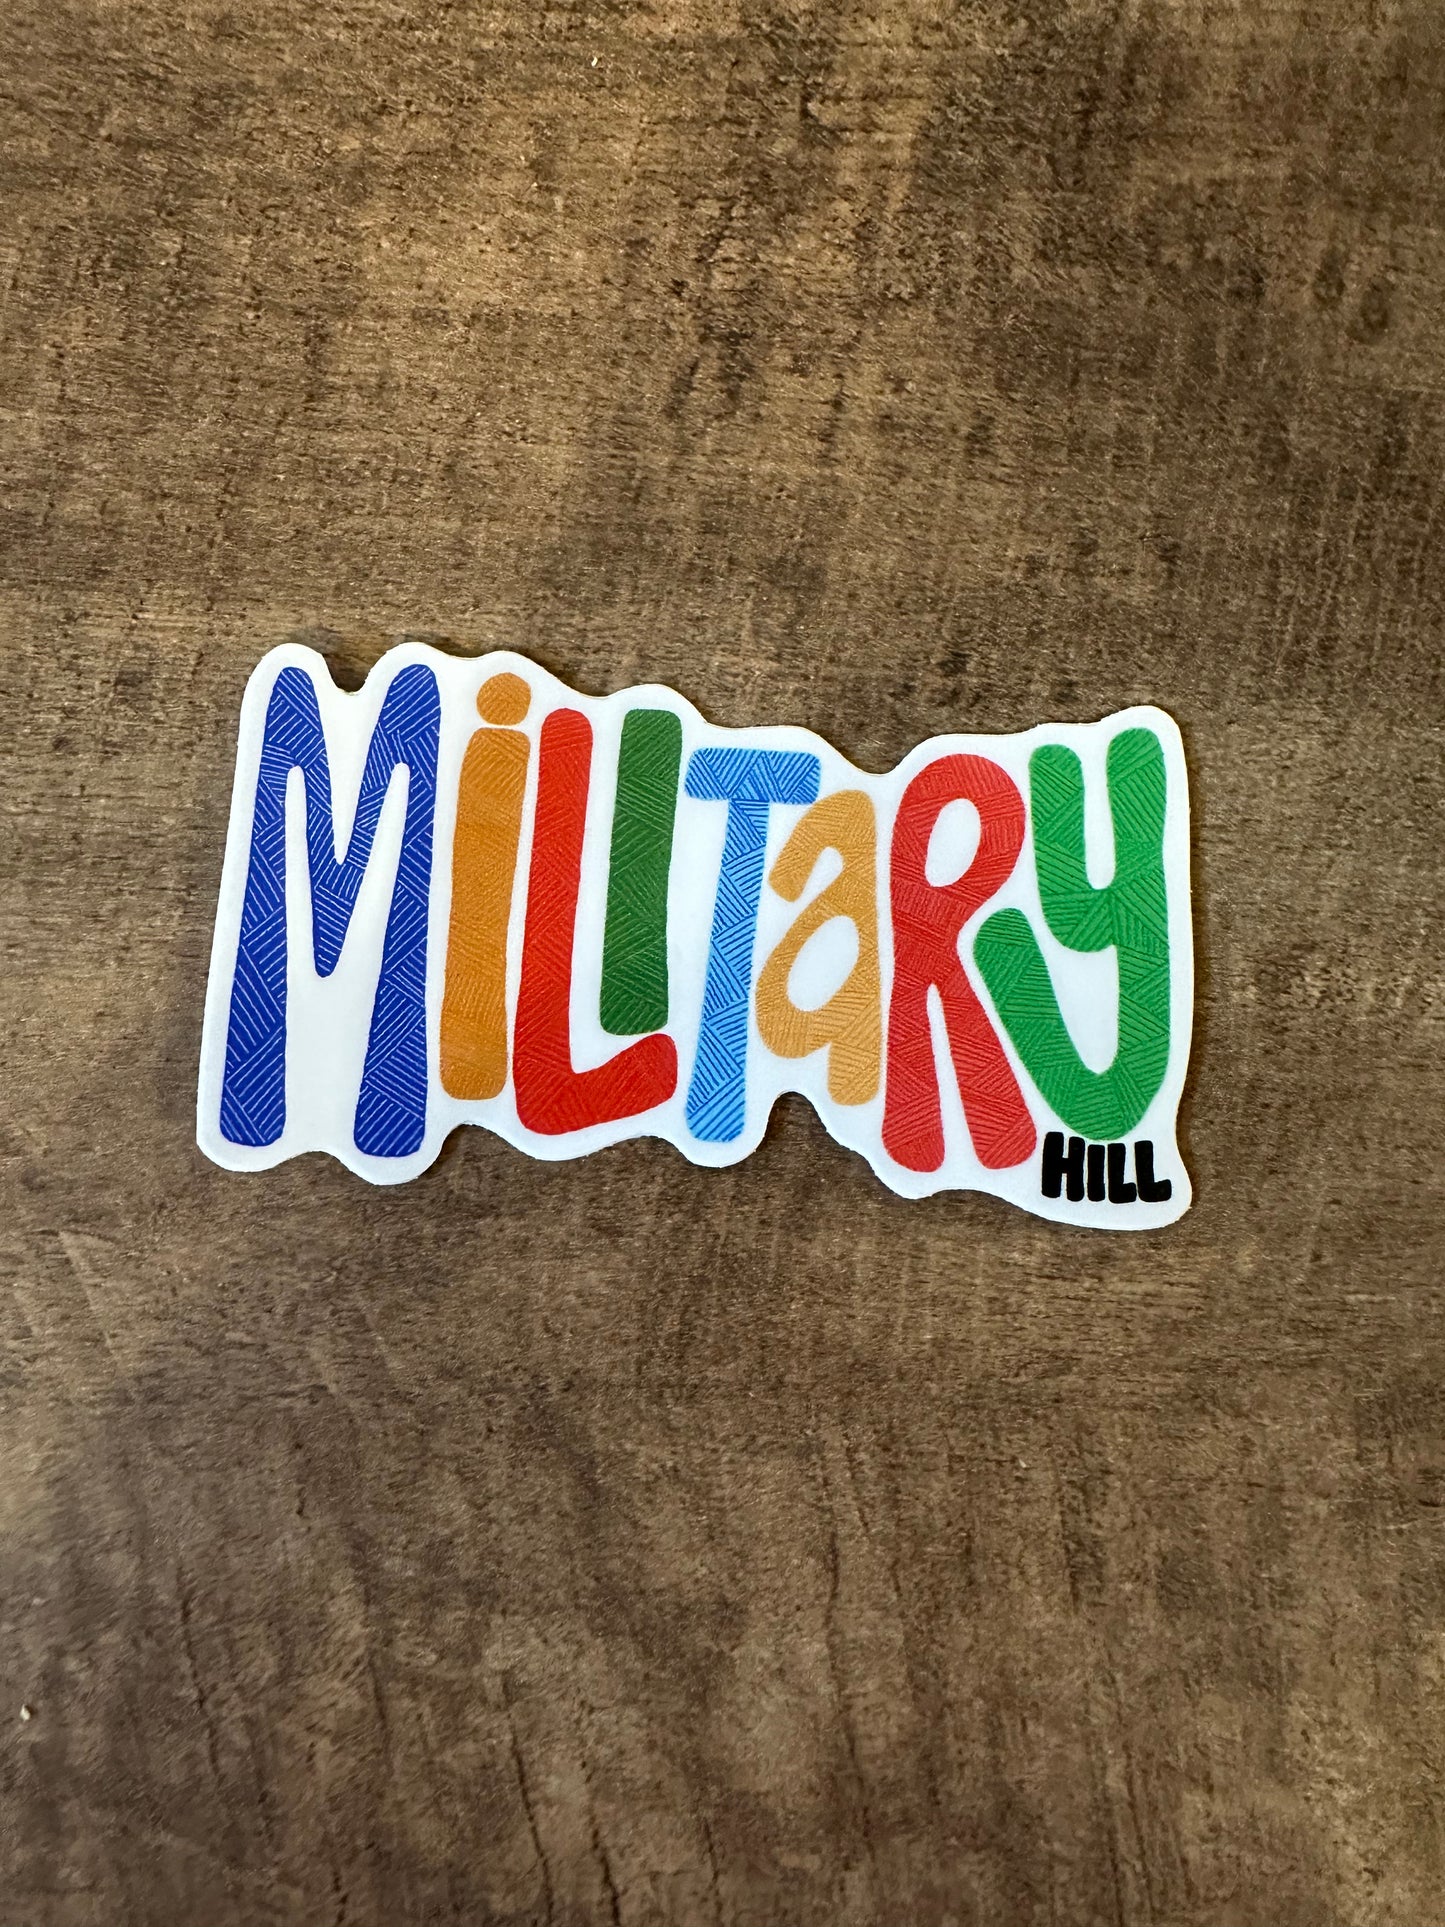 Military Hill Sticker